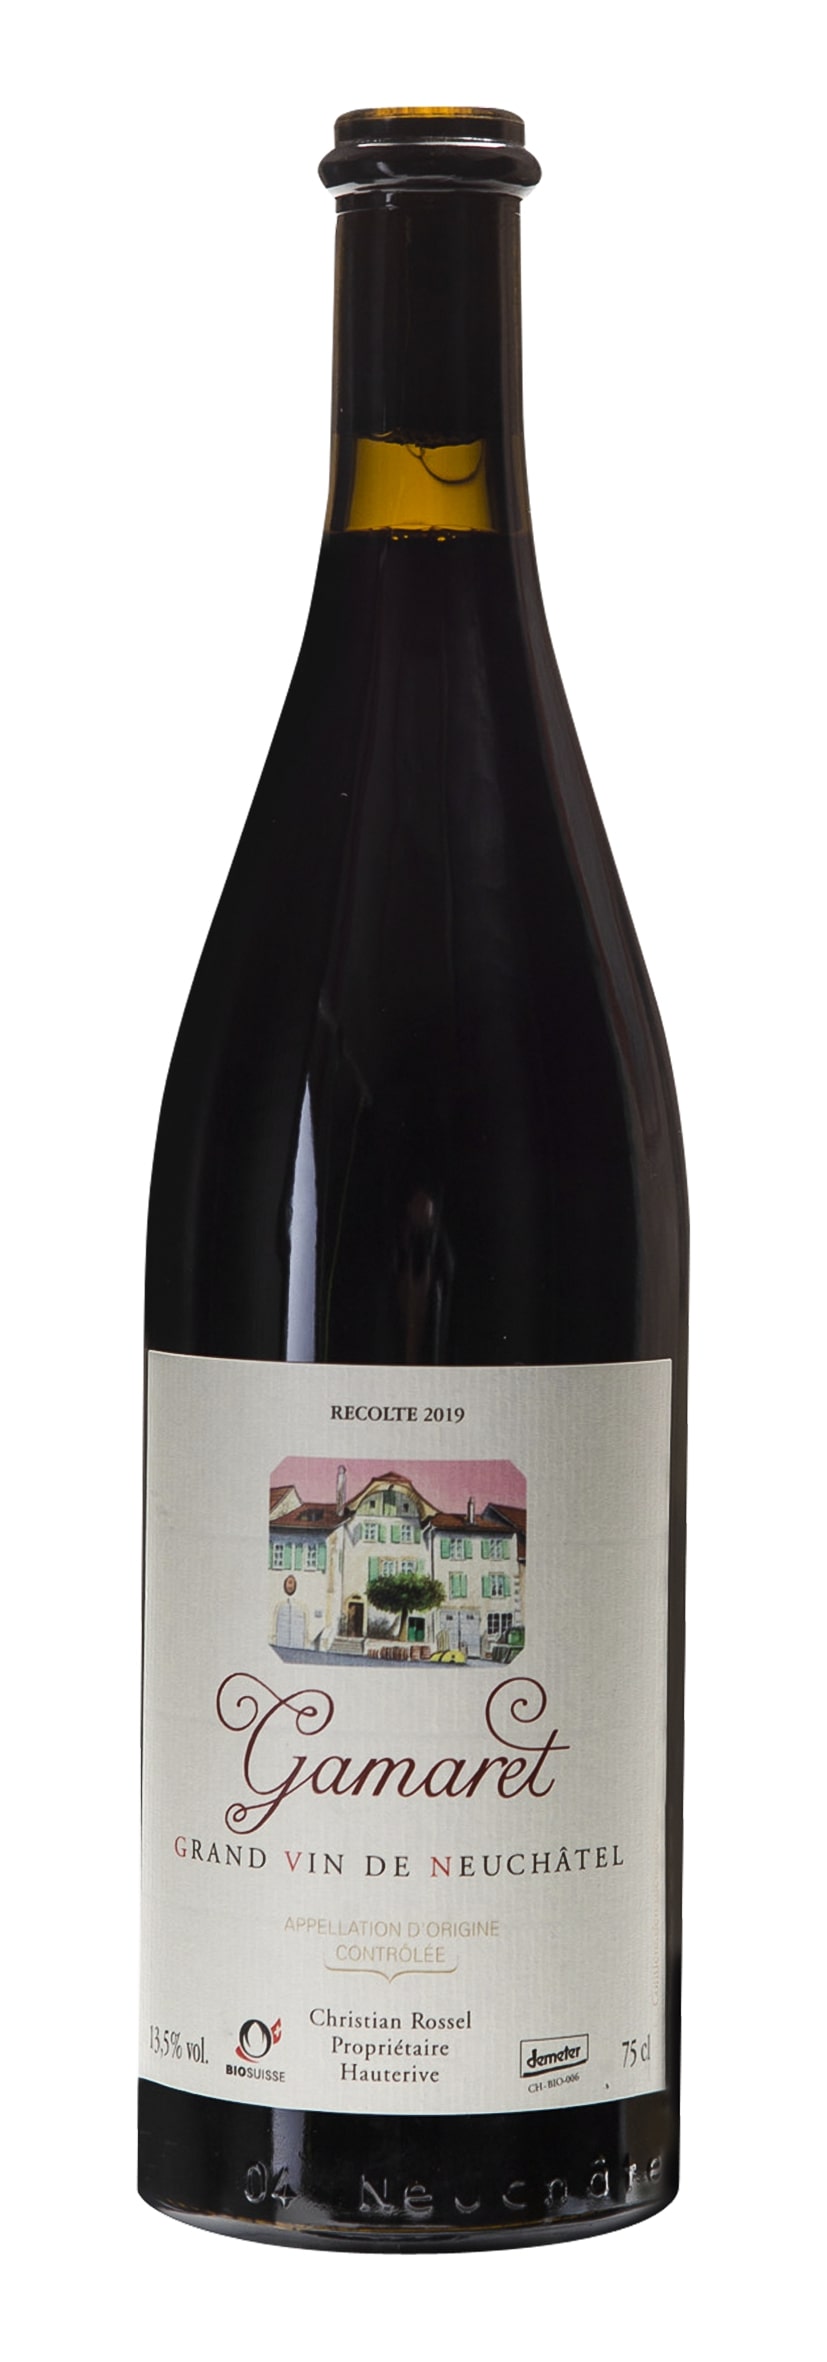 Neuchâtel AOC Gamaret Grand vin de Neuchâtel 2019